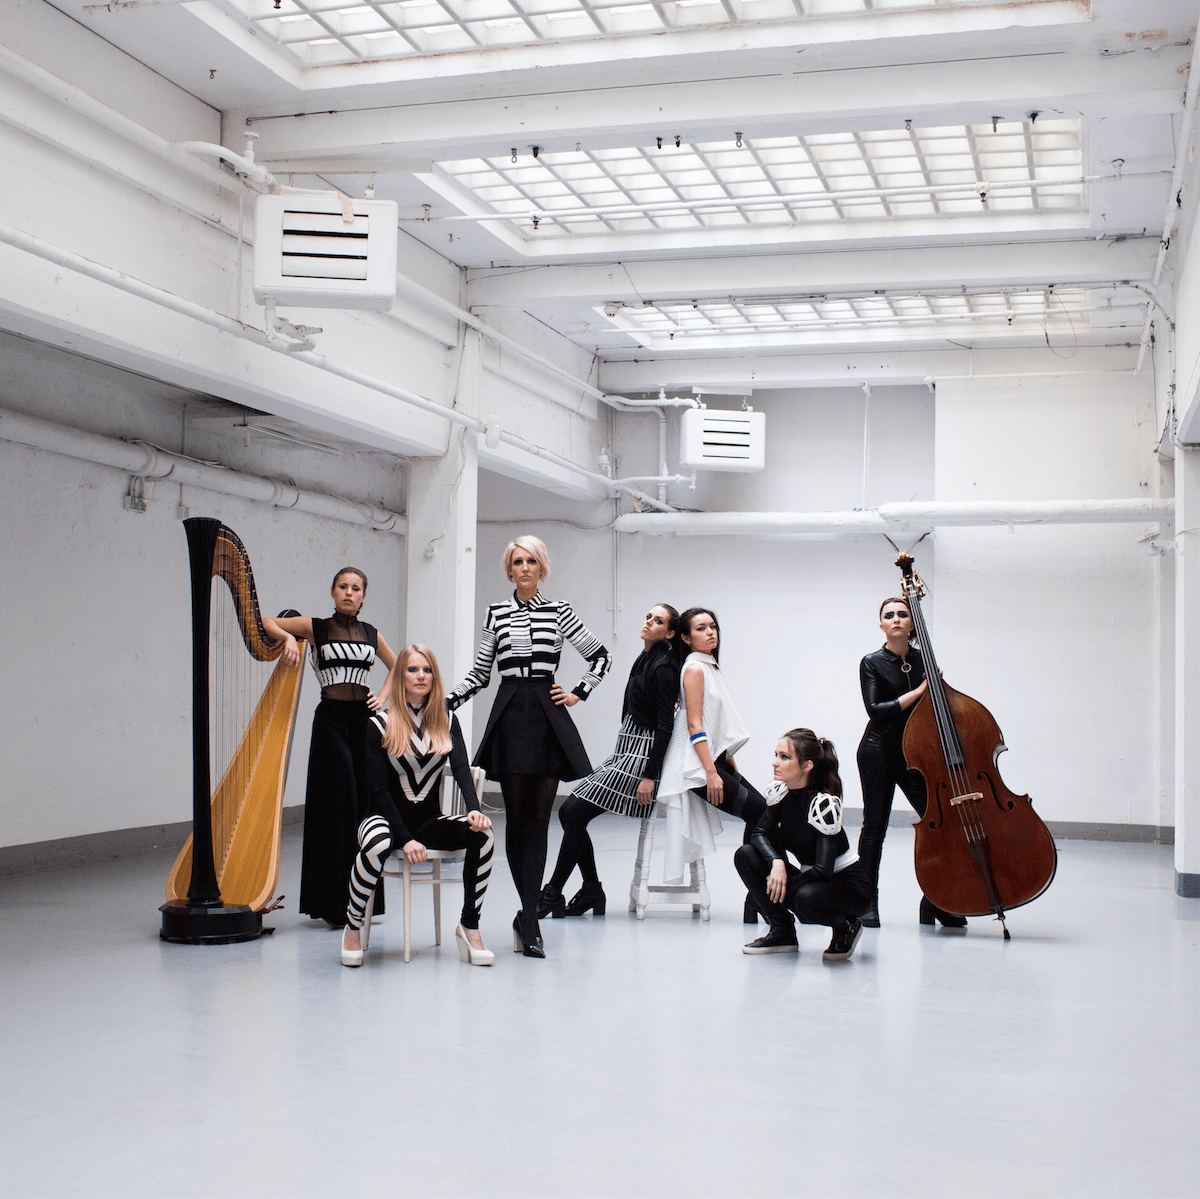 Kate Simko and London Electronic Orchestra: International Showcase Fund